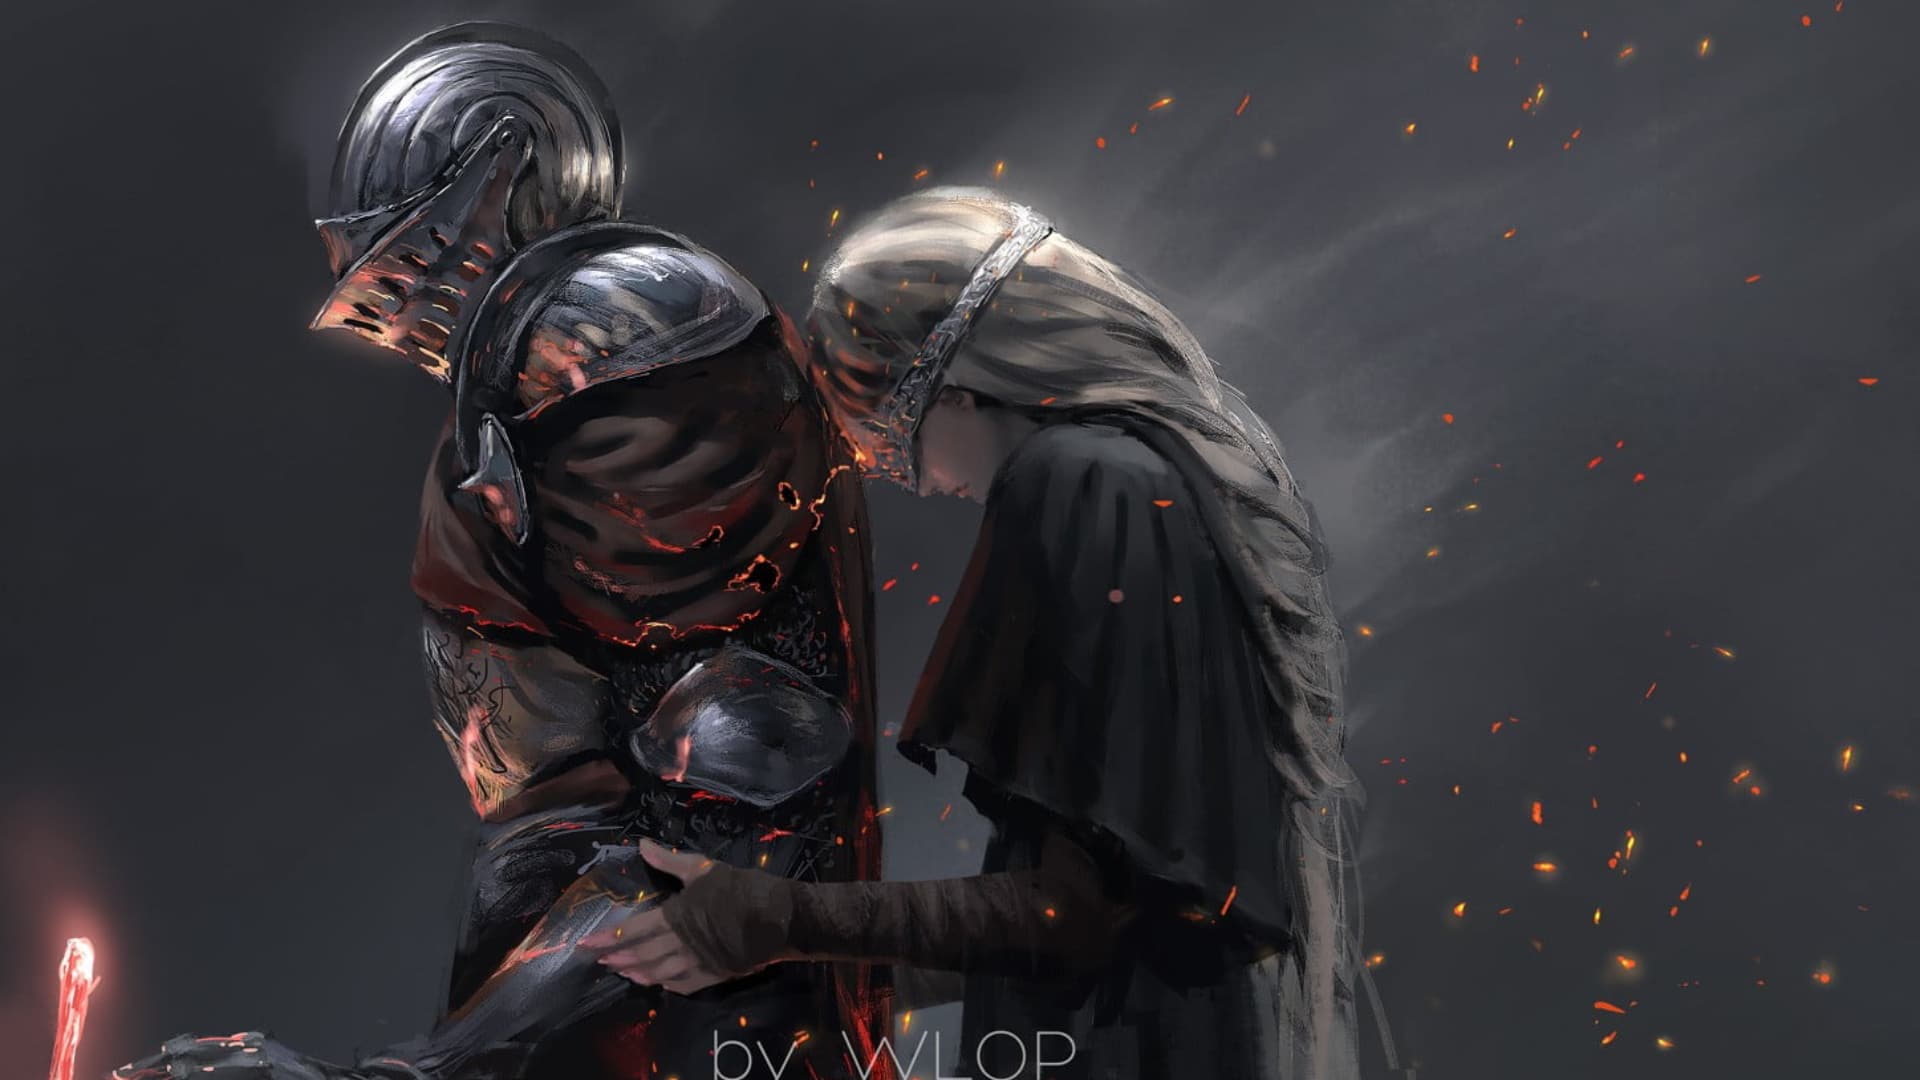 wallpaper of a knight and a princess - WLOP Fantasy art - Digital art dark souls III